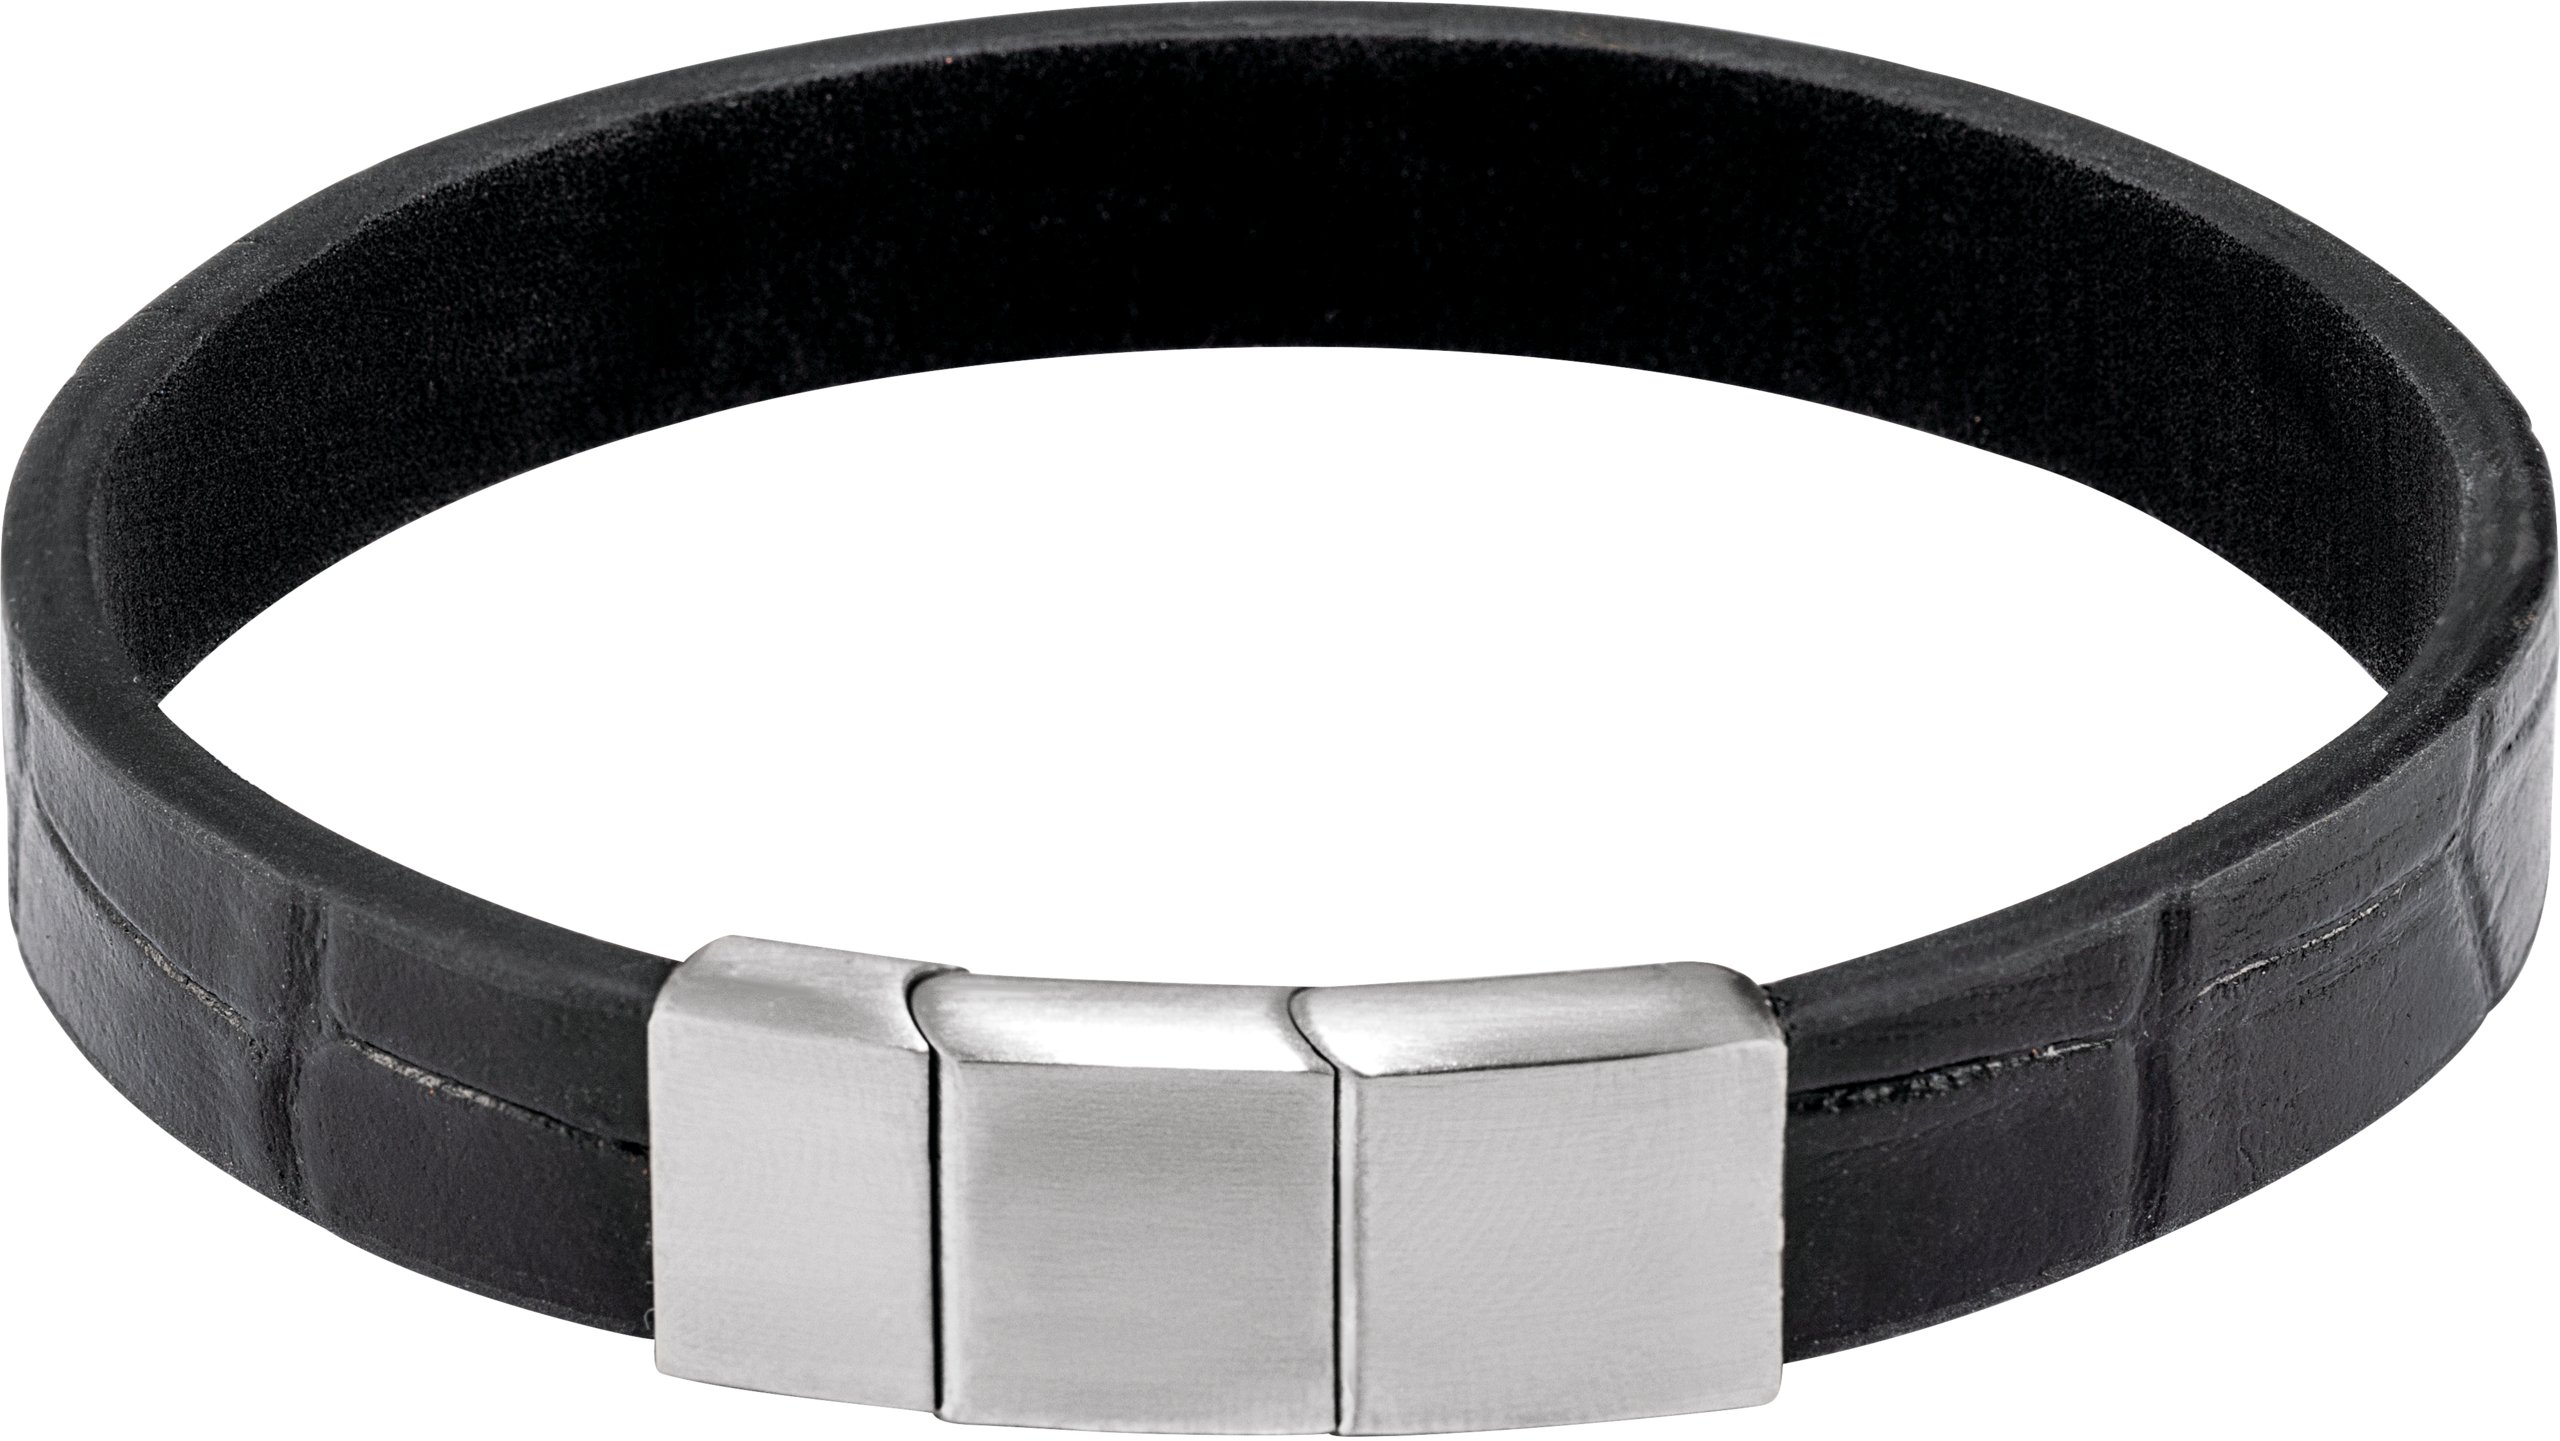 Stainless Steel 11 mm Black Leather 8 1/2" Bracelet